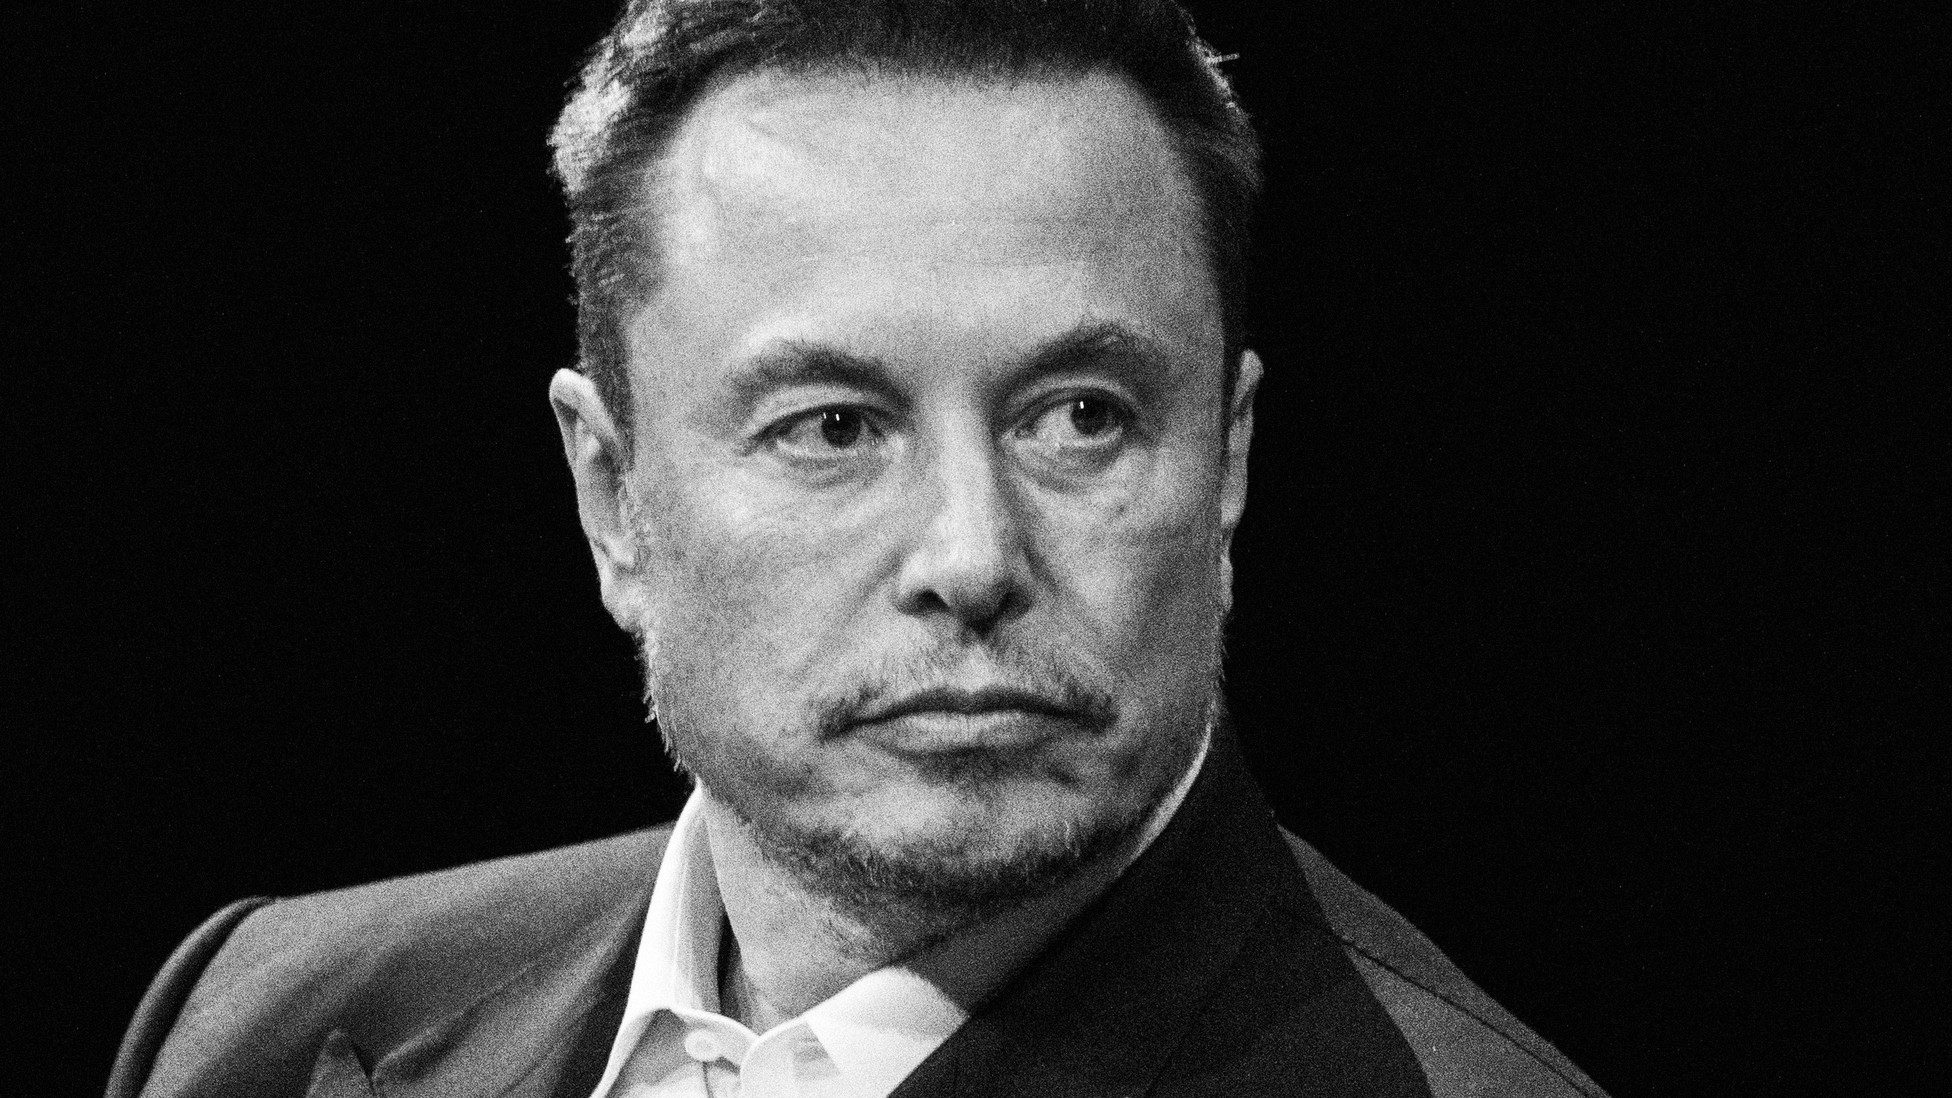 Elon Musk’s Disturbing ‘Truth’: The billionaire affirmed the deadliest anti-Semitic conspiracy theory in recent American history (theatlantic.com)